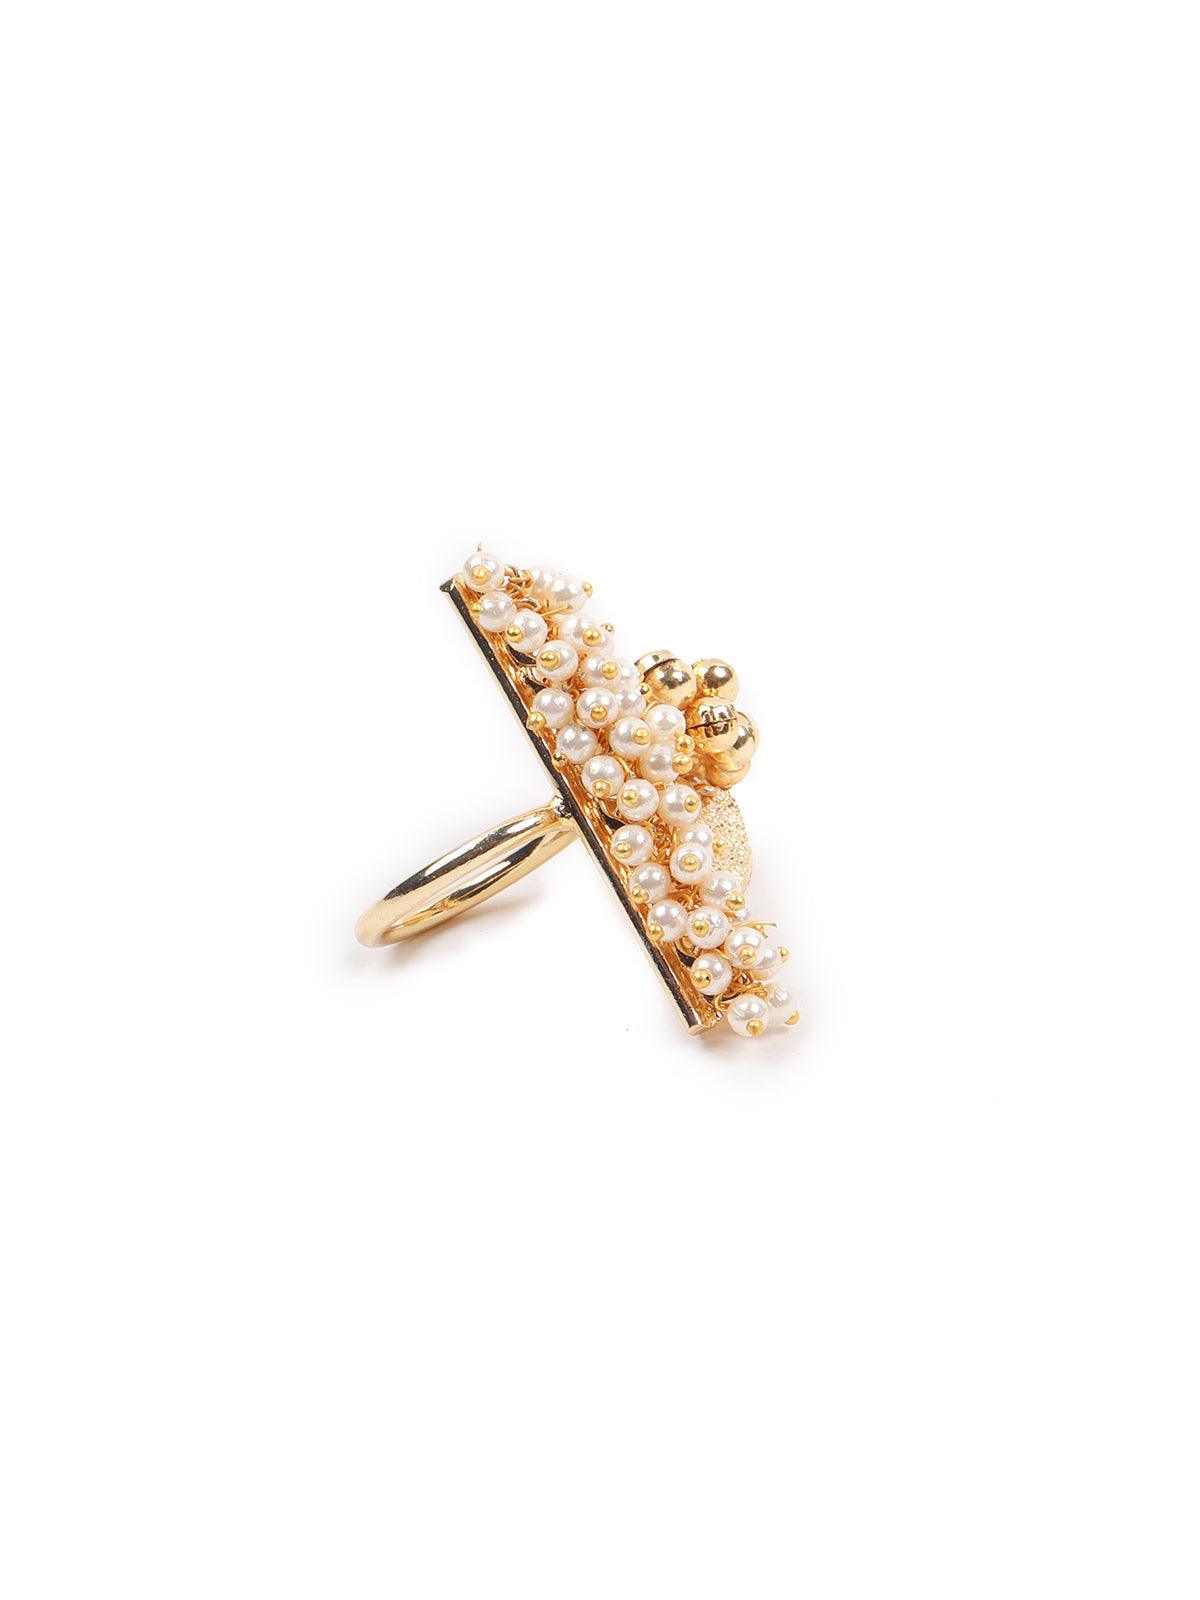 Women's Beautiful Gold Tone Pearl Ring - Odette